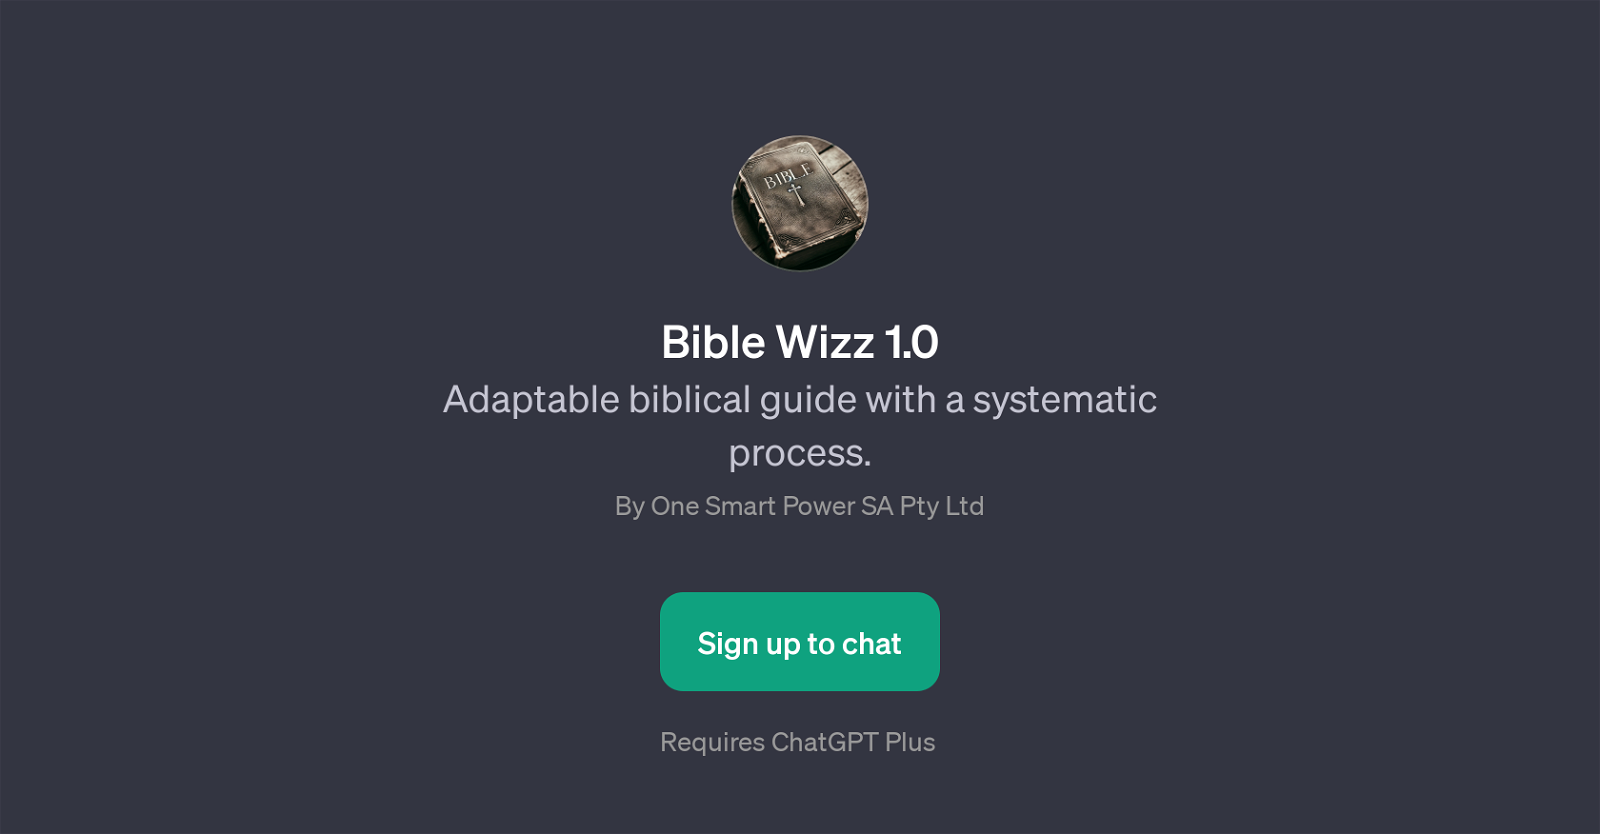 Bible Wizz 1.0 website